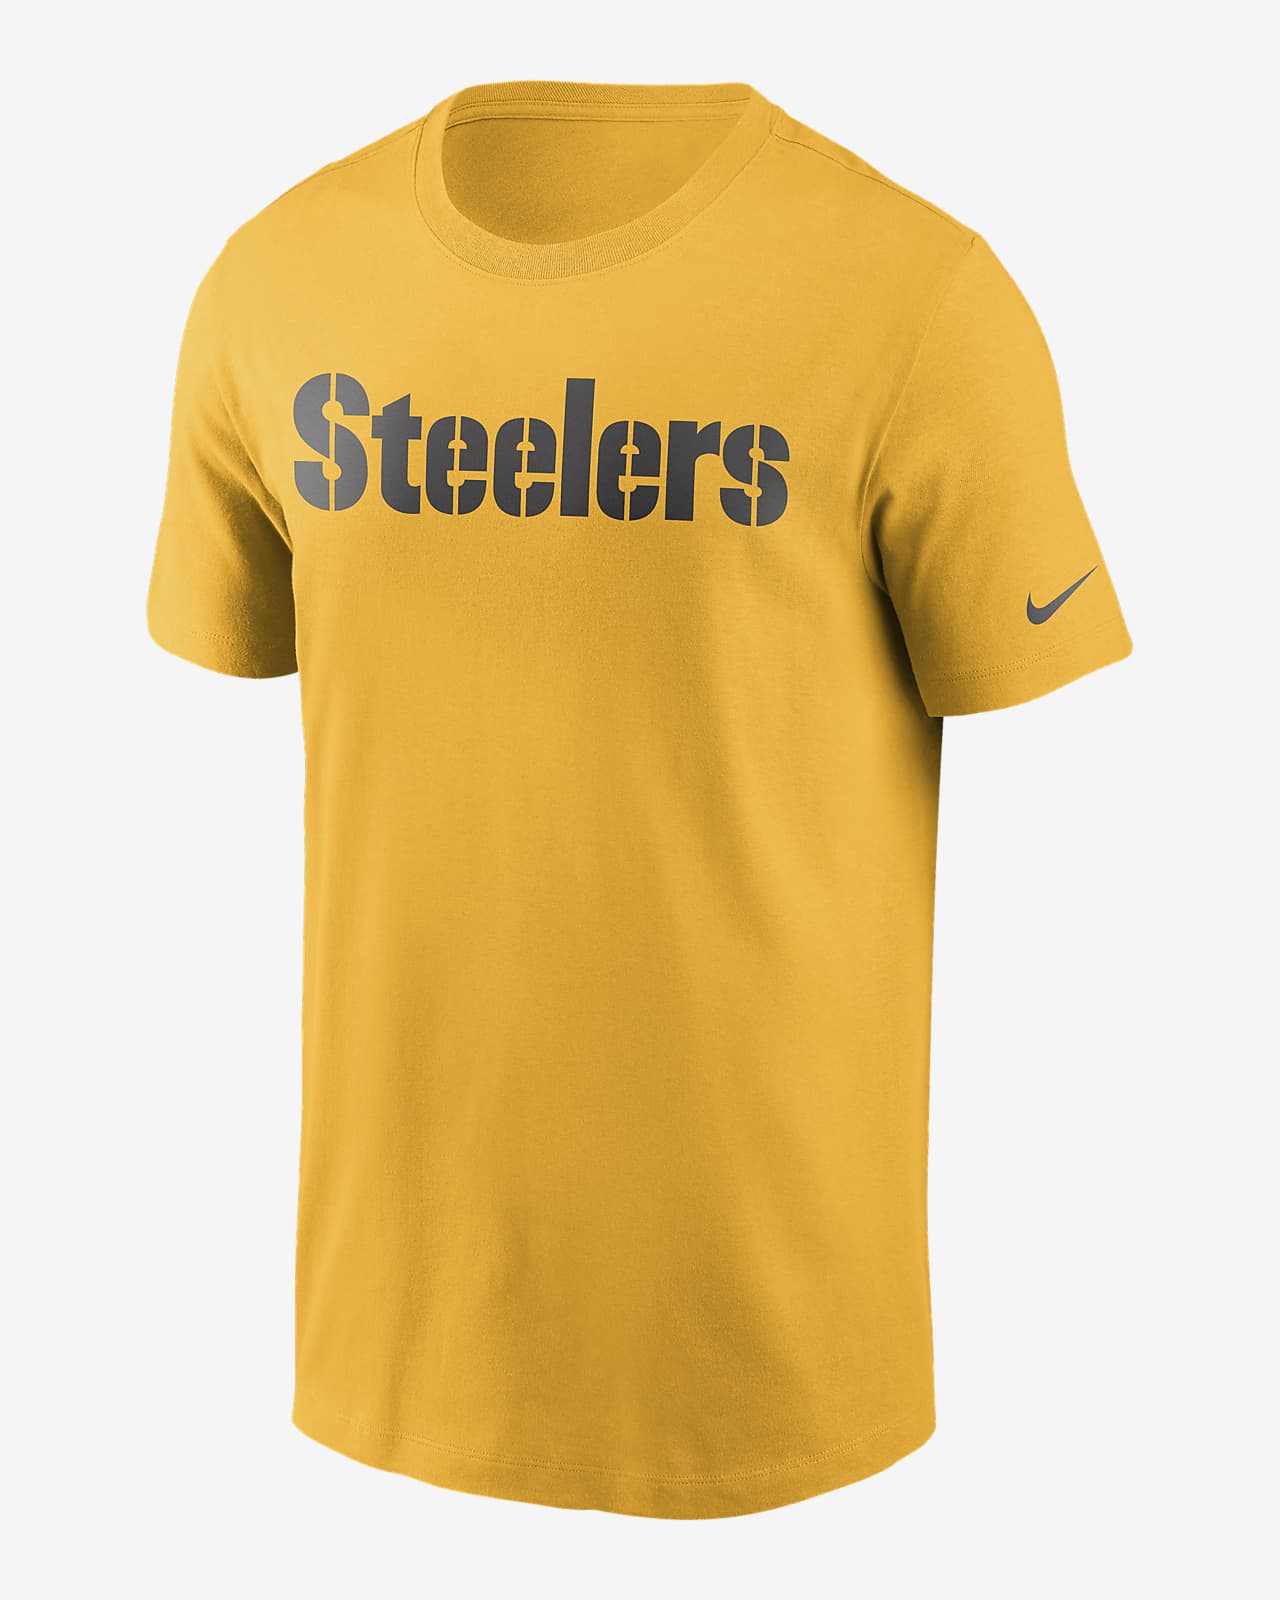 cheap steelers shirts